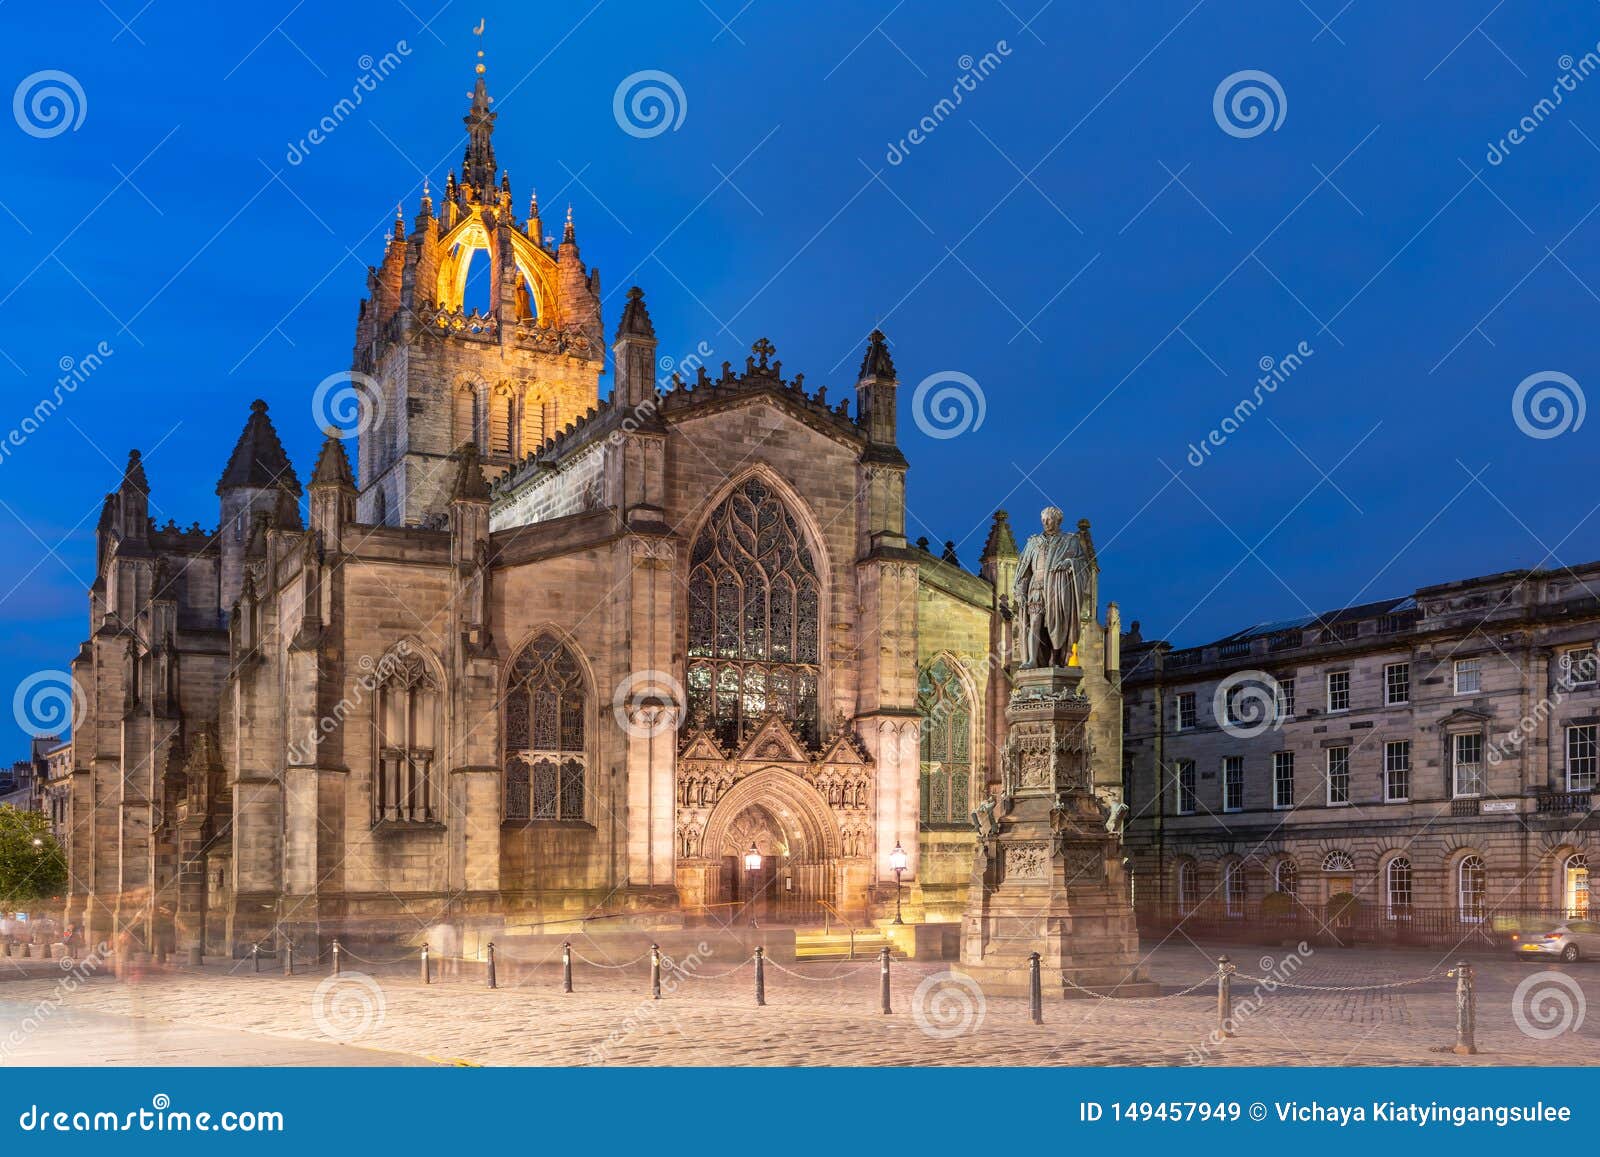 st giles` cathedral edinburgh royal mile